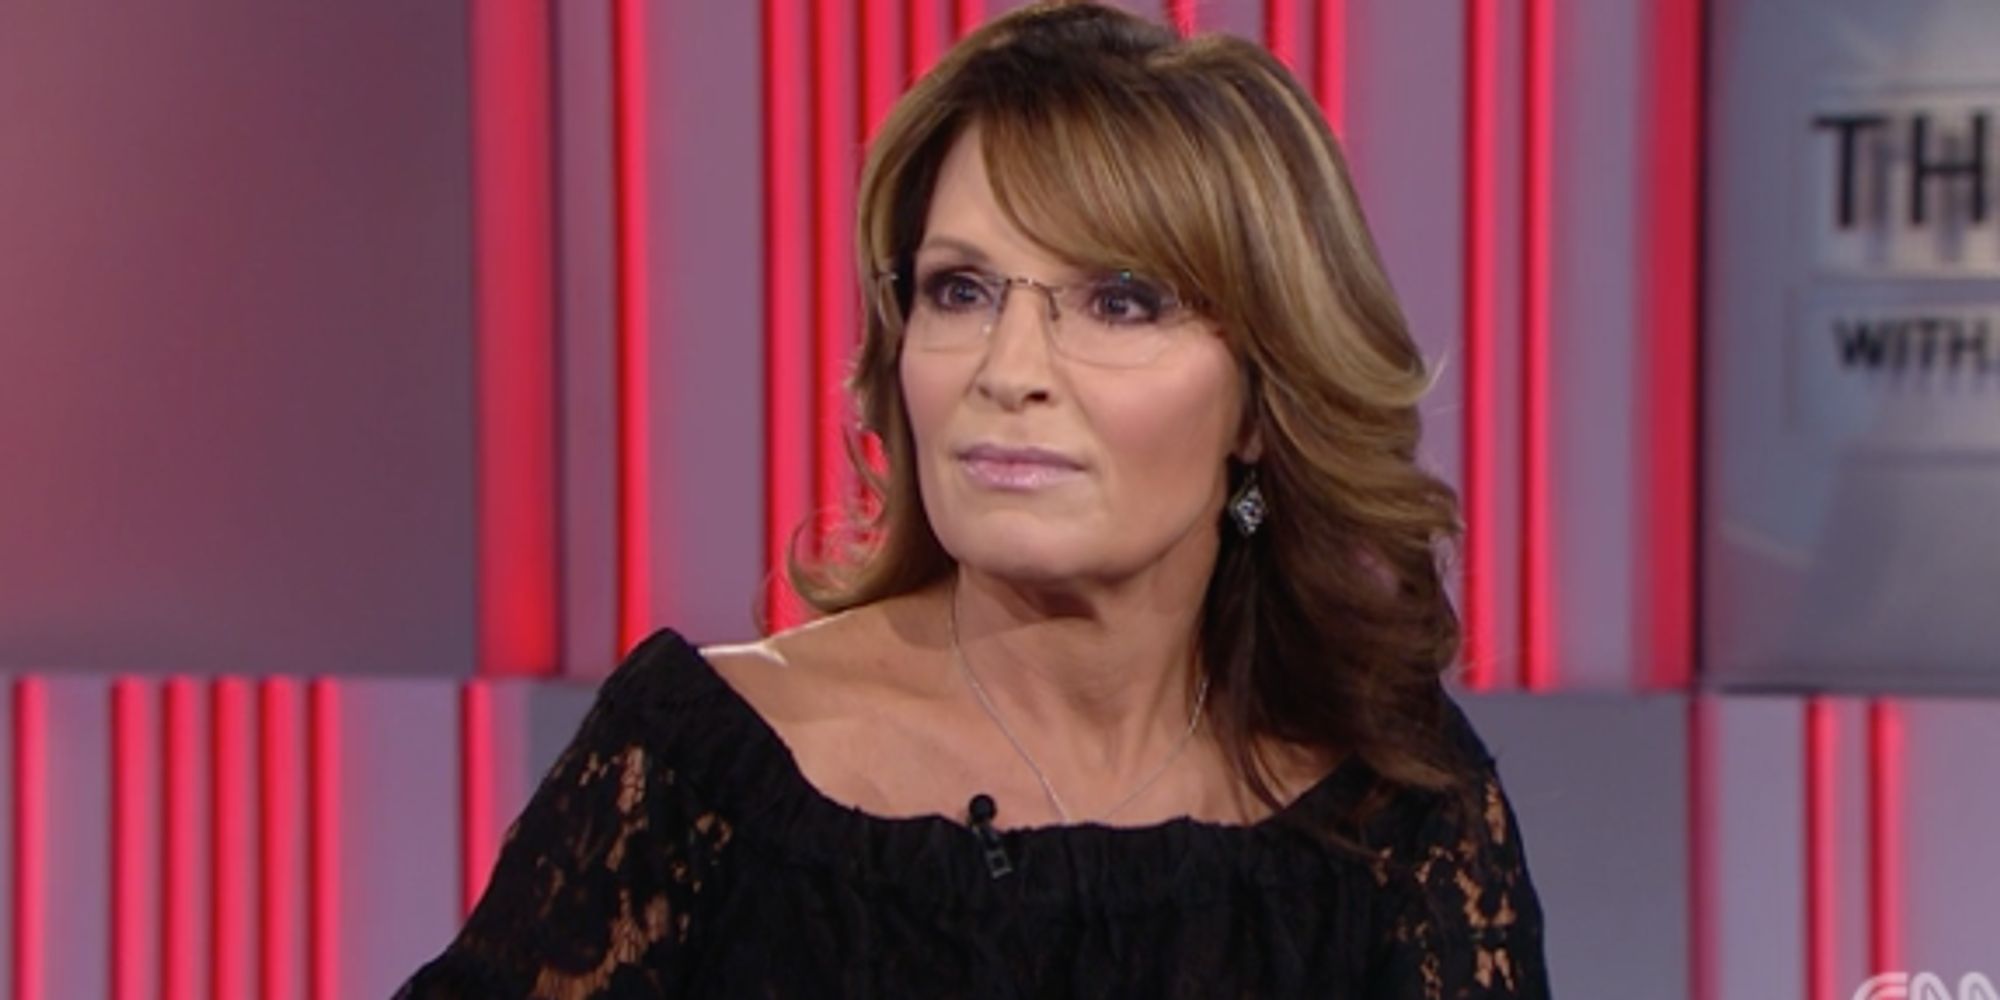 Sarah Palin Reacts To Bill Oreillys Fox News Exit By Victim Blaming